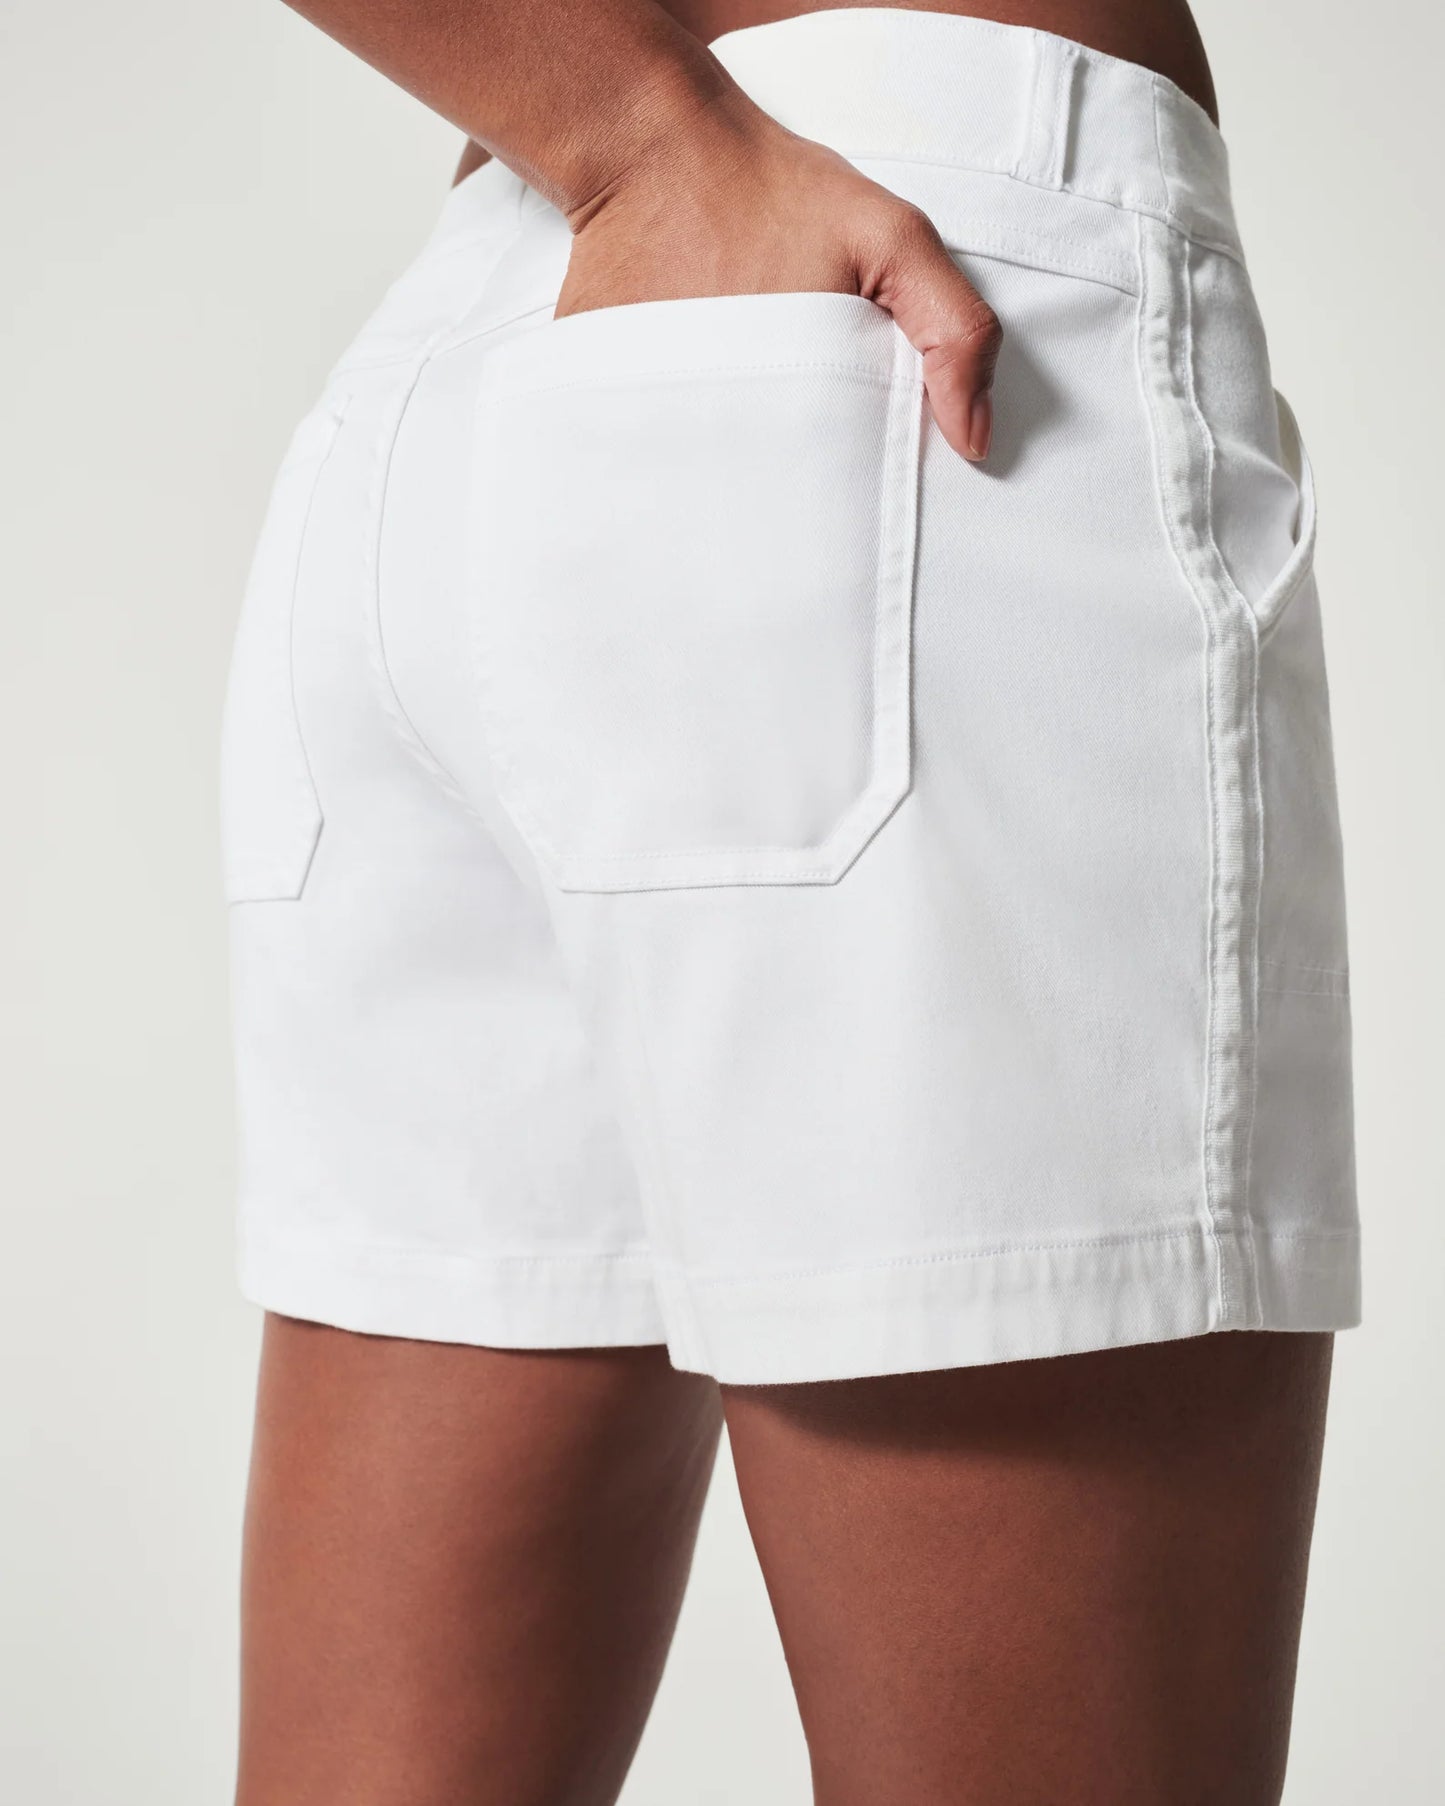 Spanx Stretch Twill Shorts 4" - Bright White